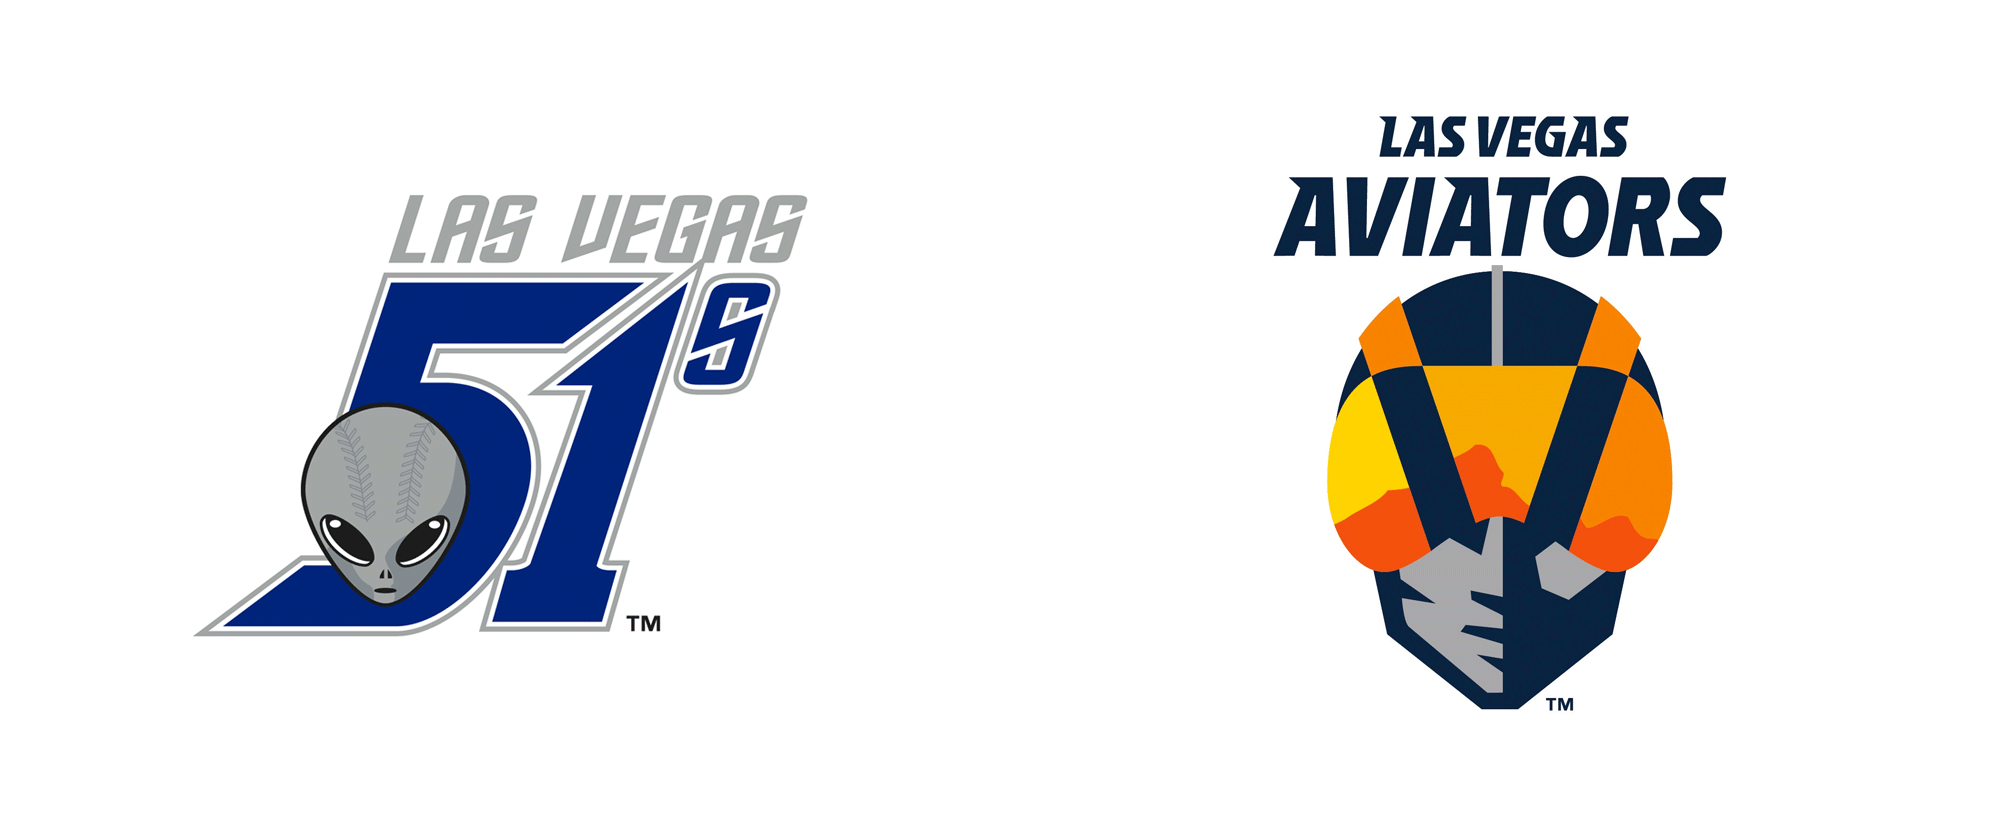 Las Vegas Logo - Brand New: New Name and Logo for Las Vegas Aviators